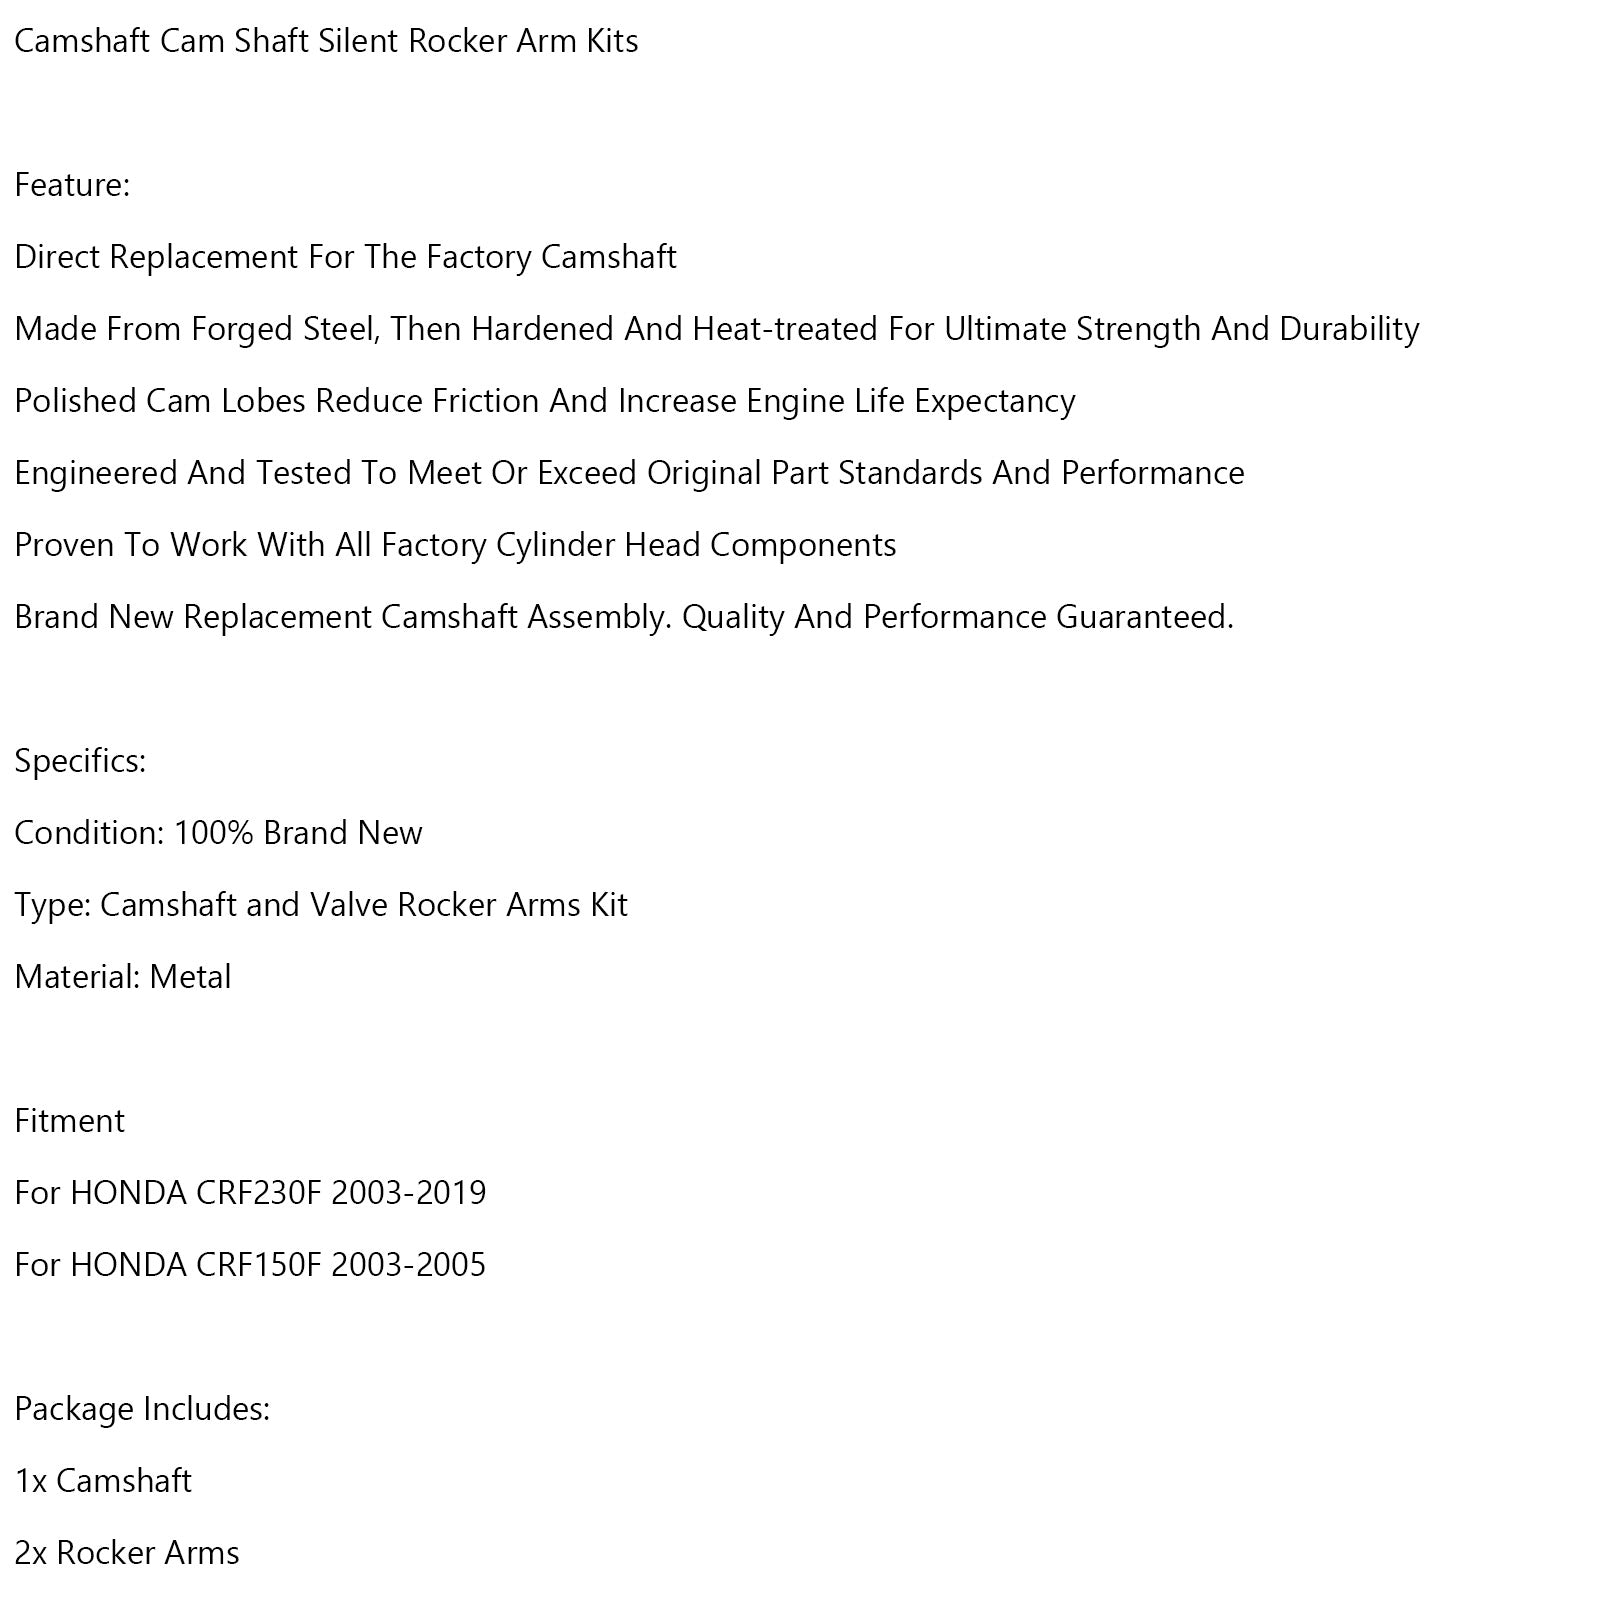 Camshaft Cam Shaft Silent Rocker Arm Kits for Honda CRF150F CRF230F 2003-2019